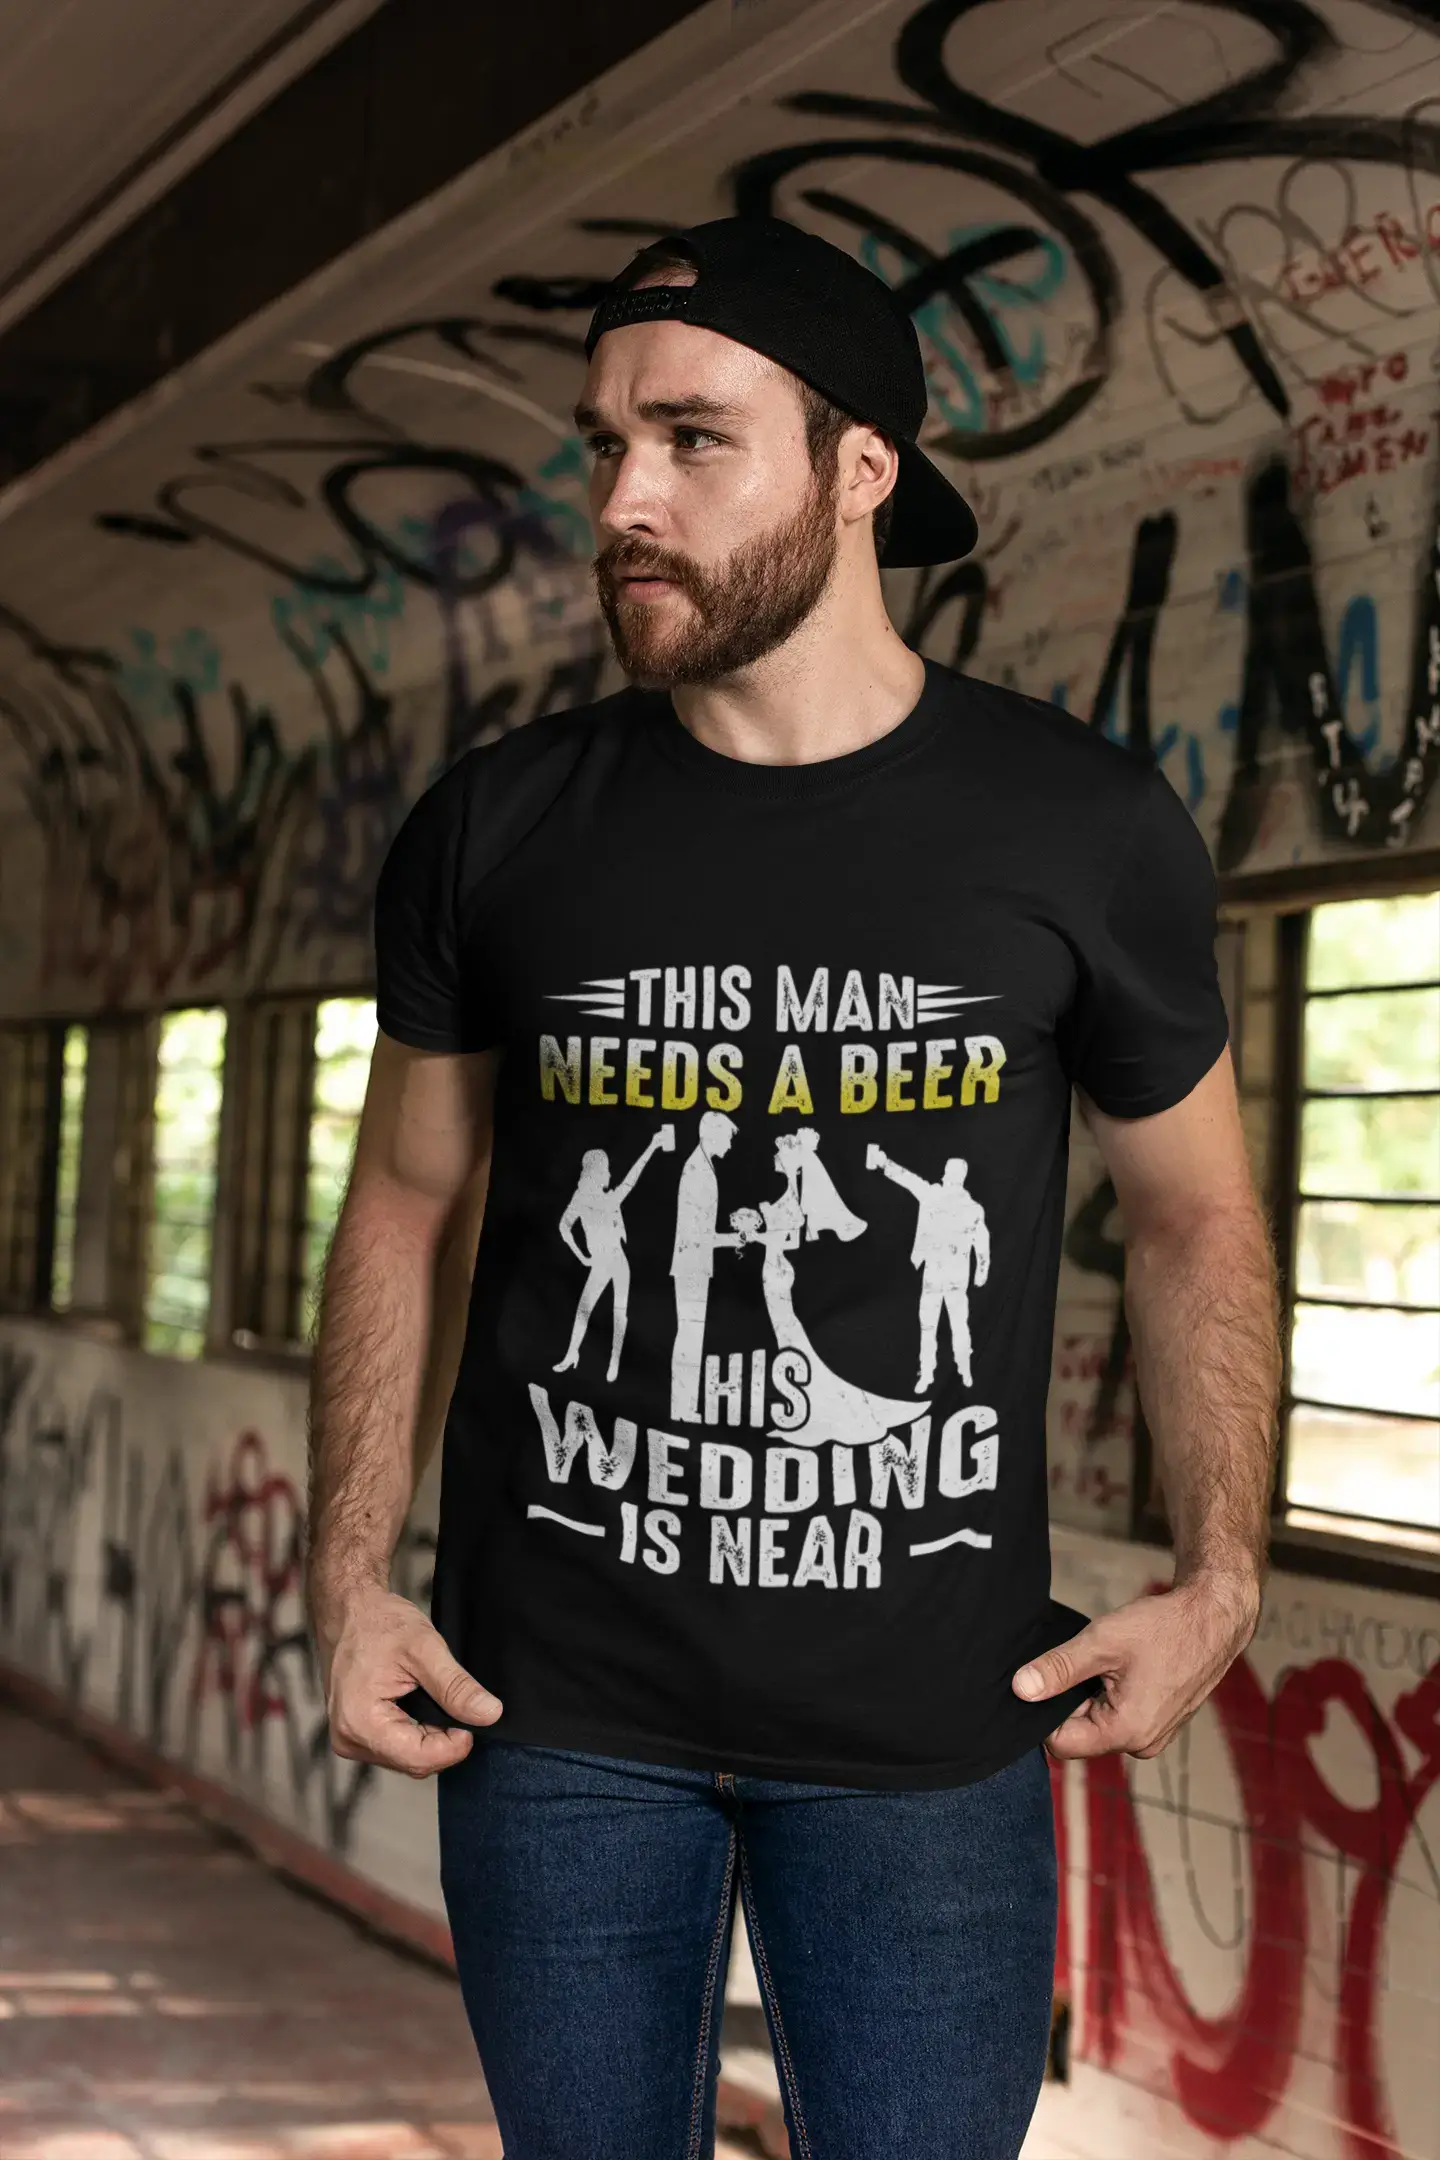 ULTRABASIC Men's Funny T-Shirt This Man Needs a Beer His Wedding is Near - Beer Lover Bridegroom Tee Shirt